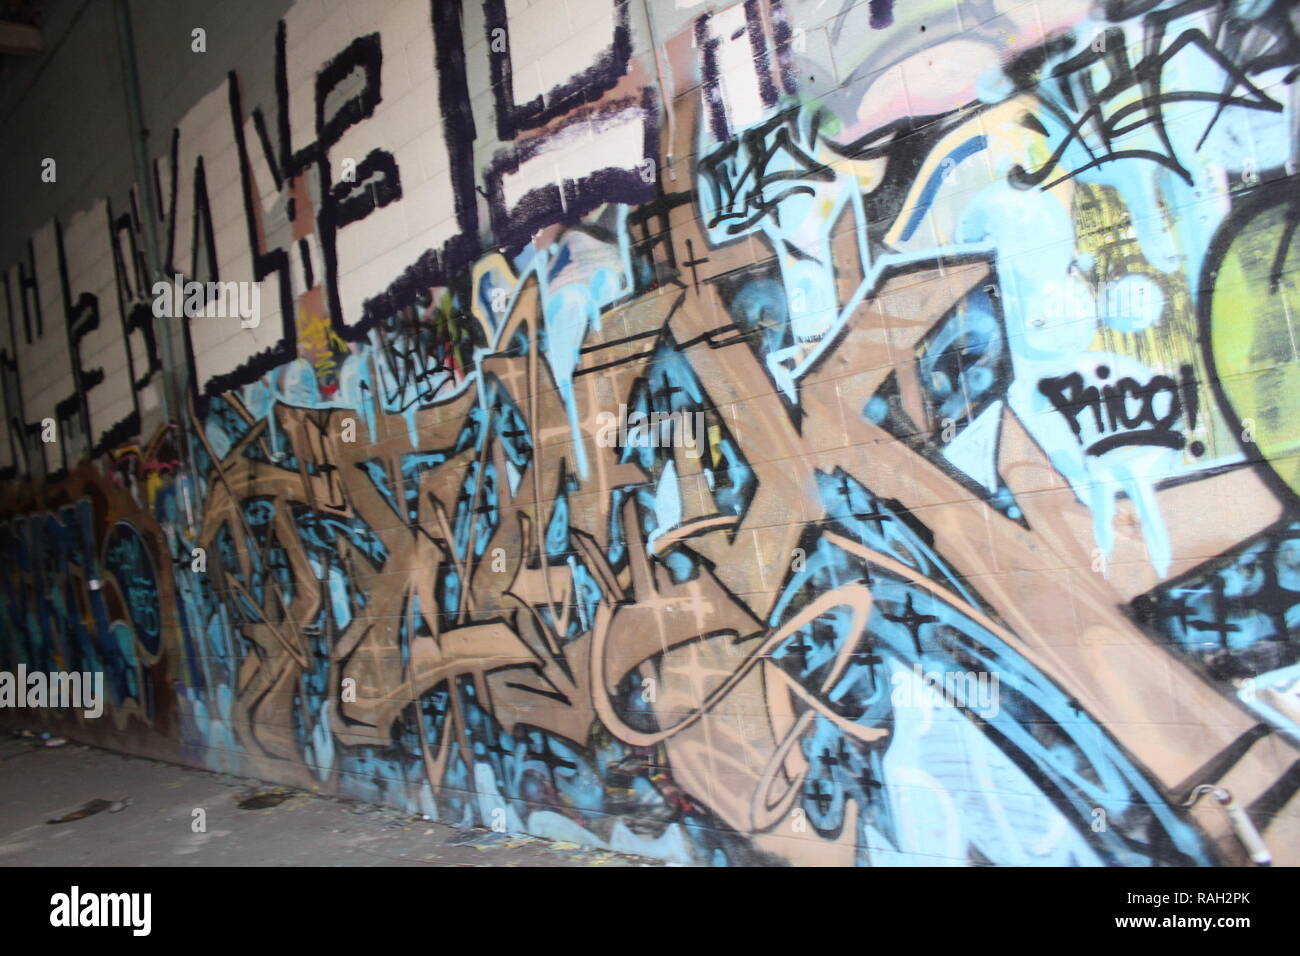 Arte graffiti urbano de Detroit Throw-Up pedazo! Foto de stock